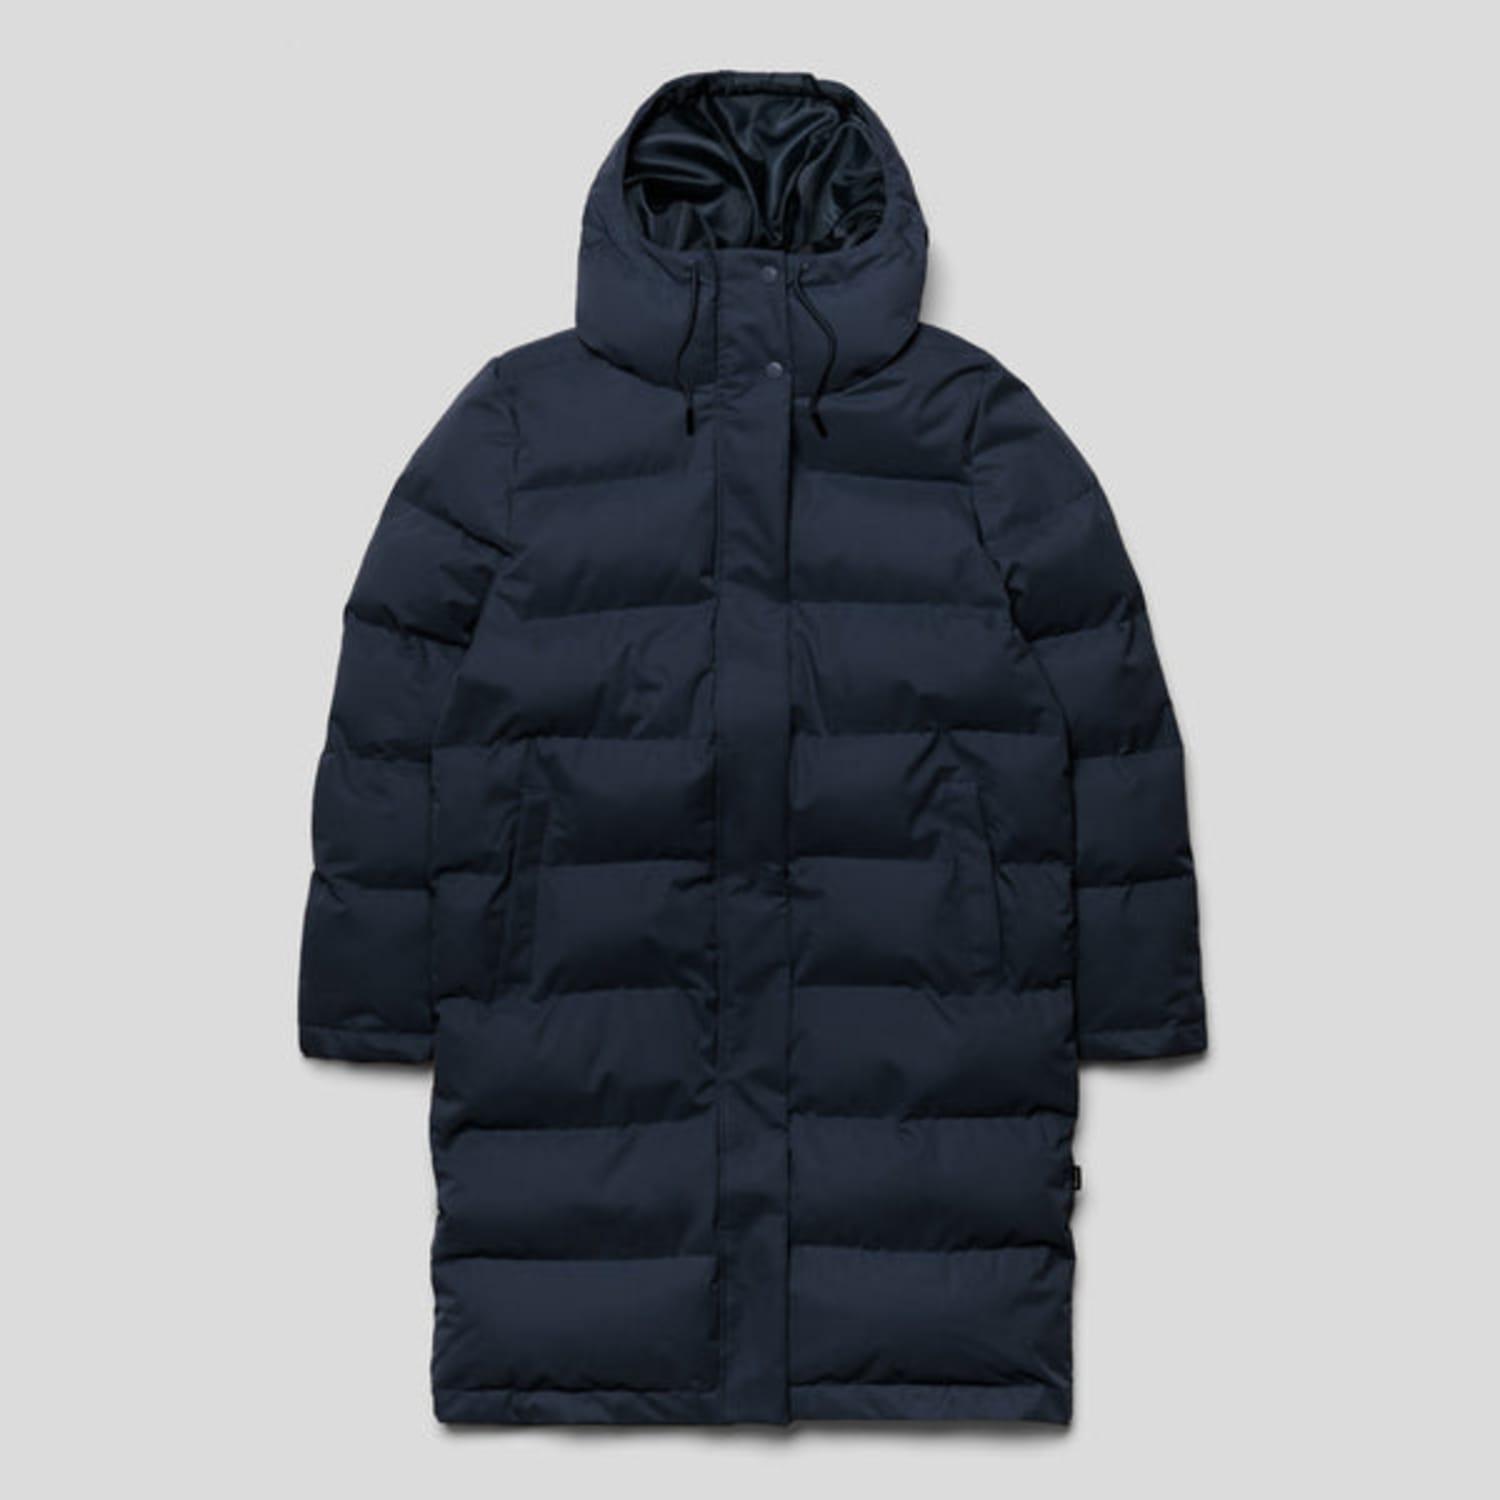 SELFHOOD Navy Blue Hooded Puffer Jacket | Lyst